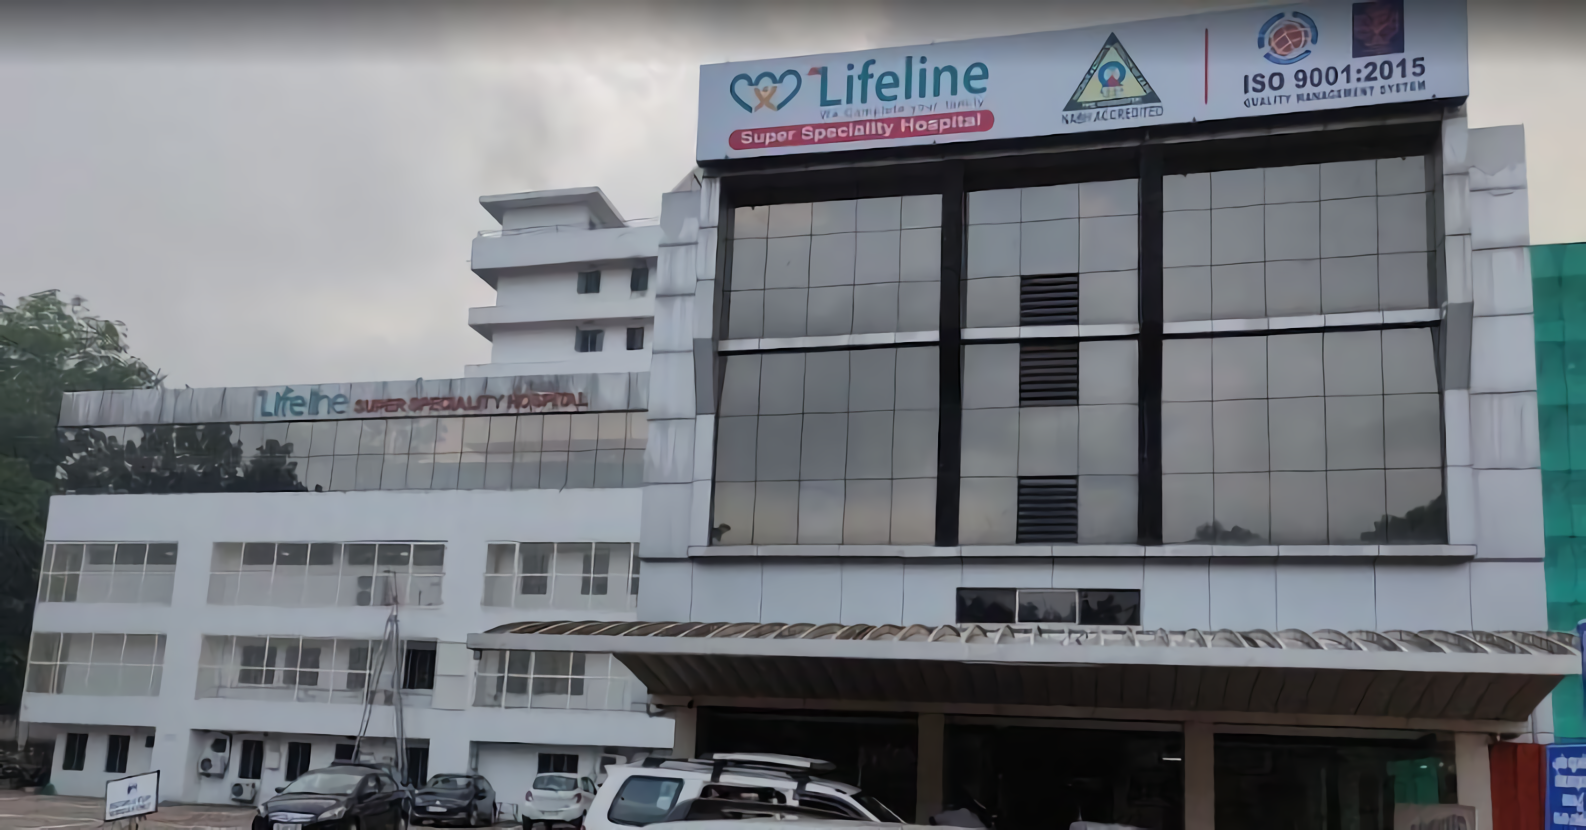 Lifeline Super Speciality Hospital